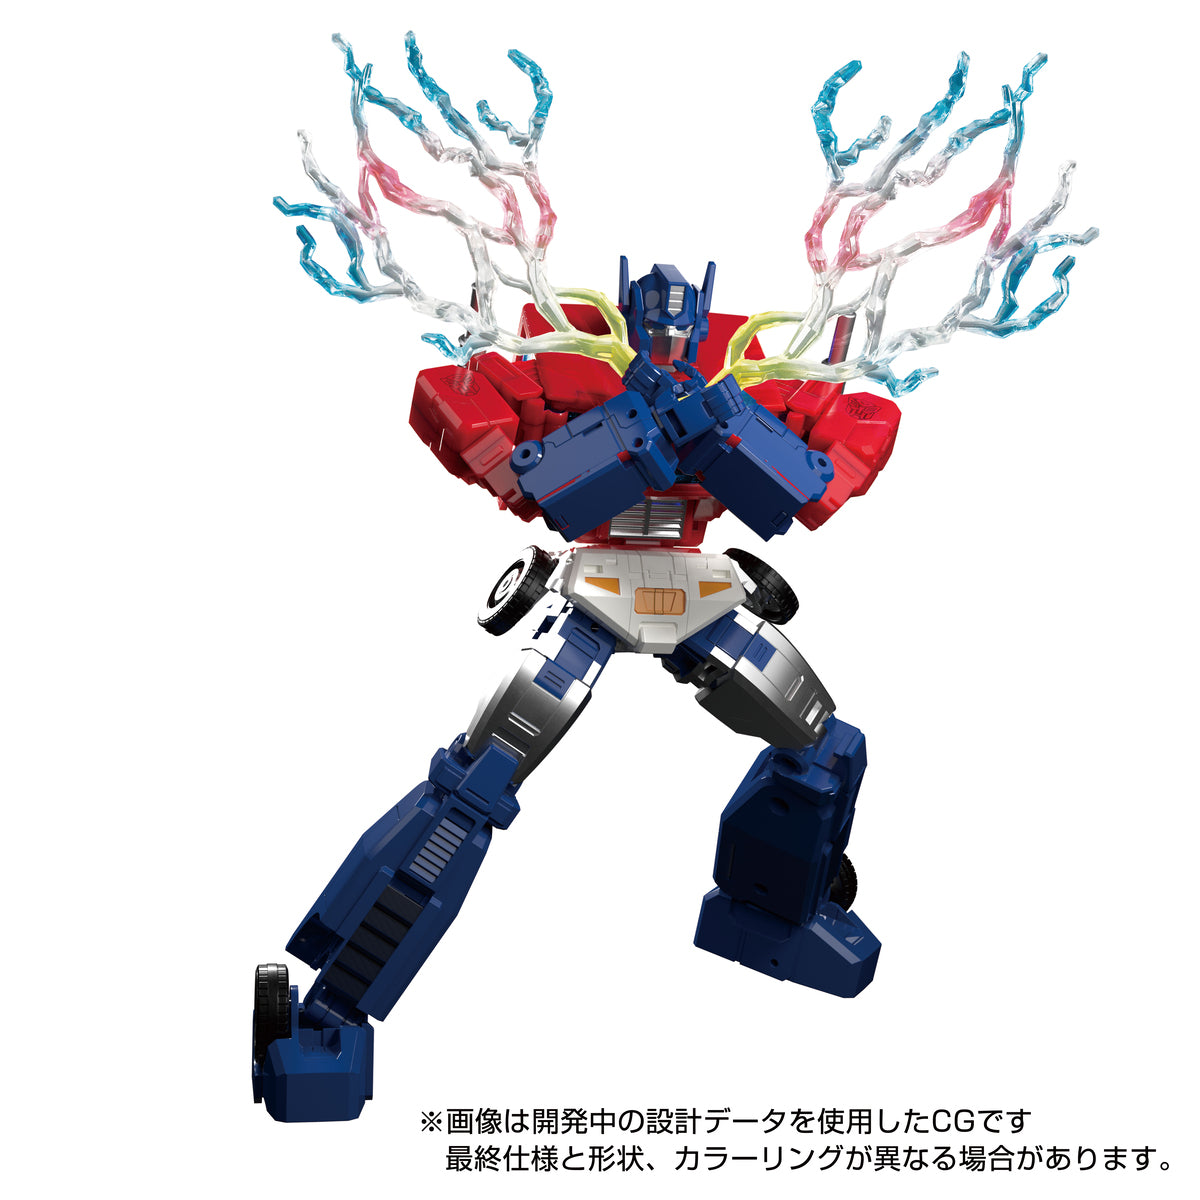 Transformers Masterpiece MPG-09 Super Jinrai Action Figure Toy